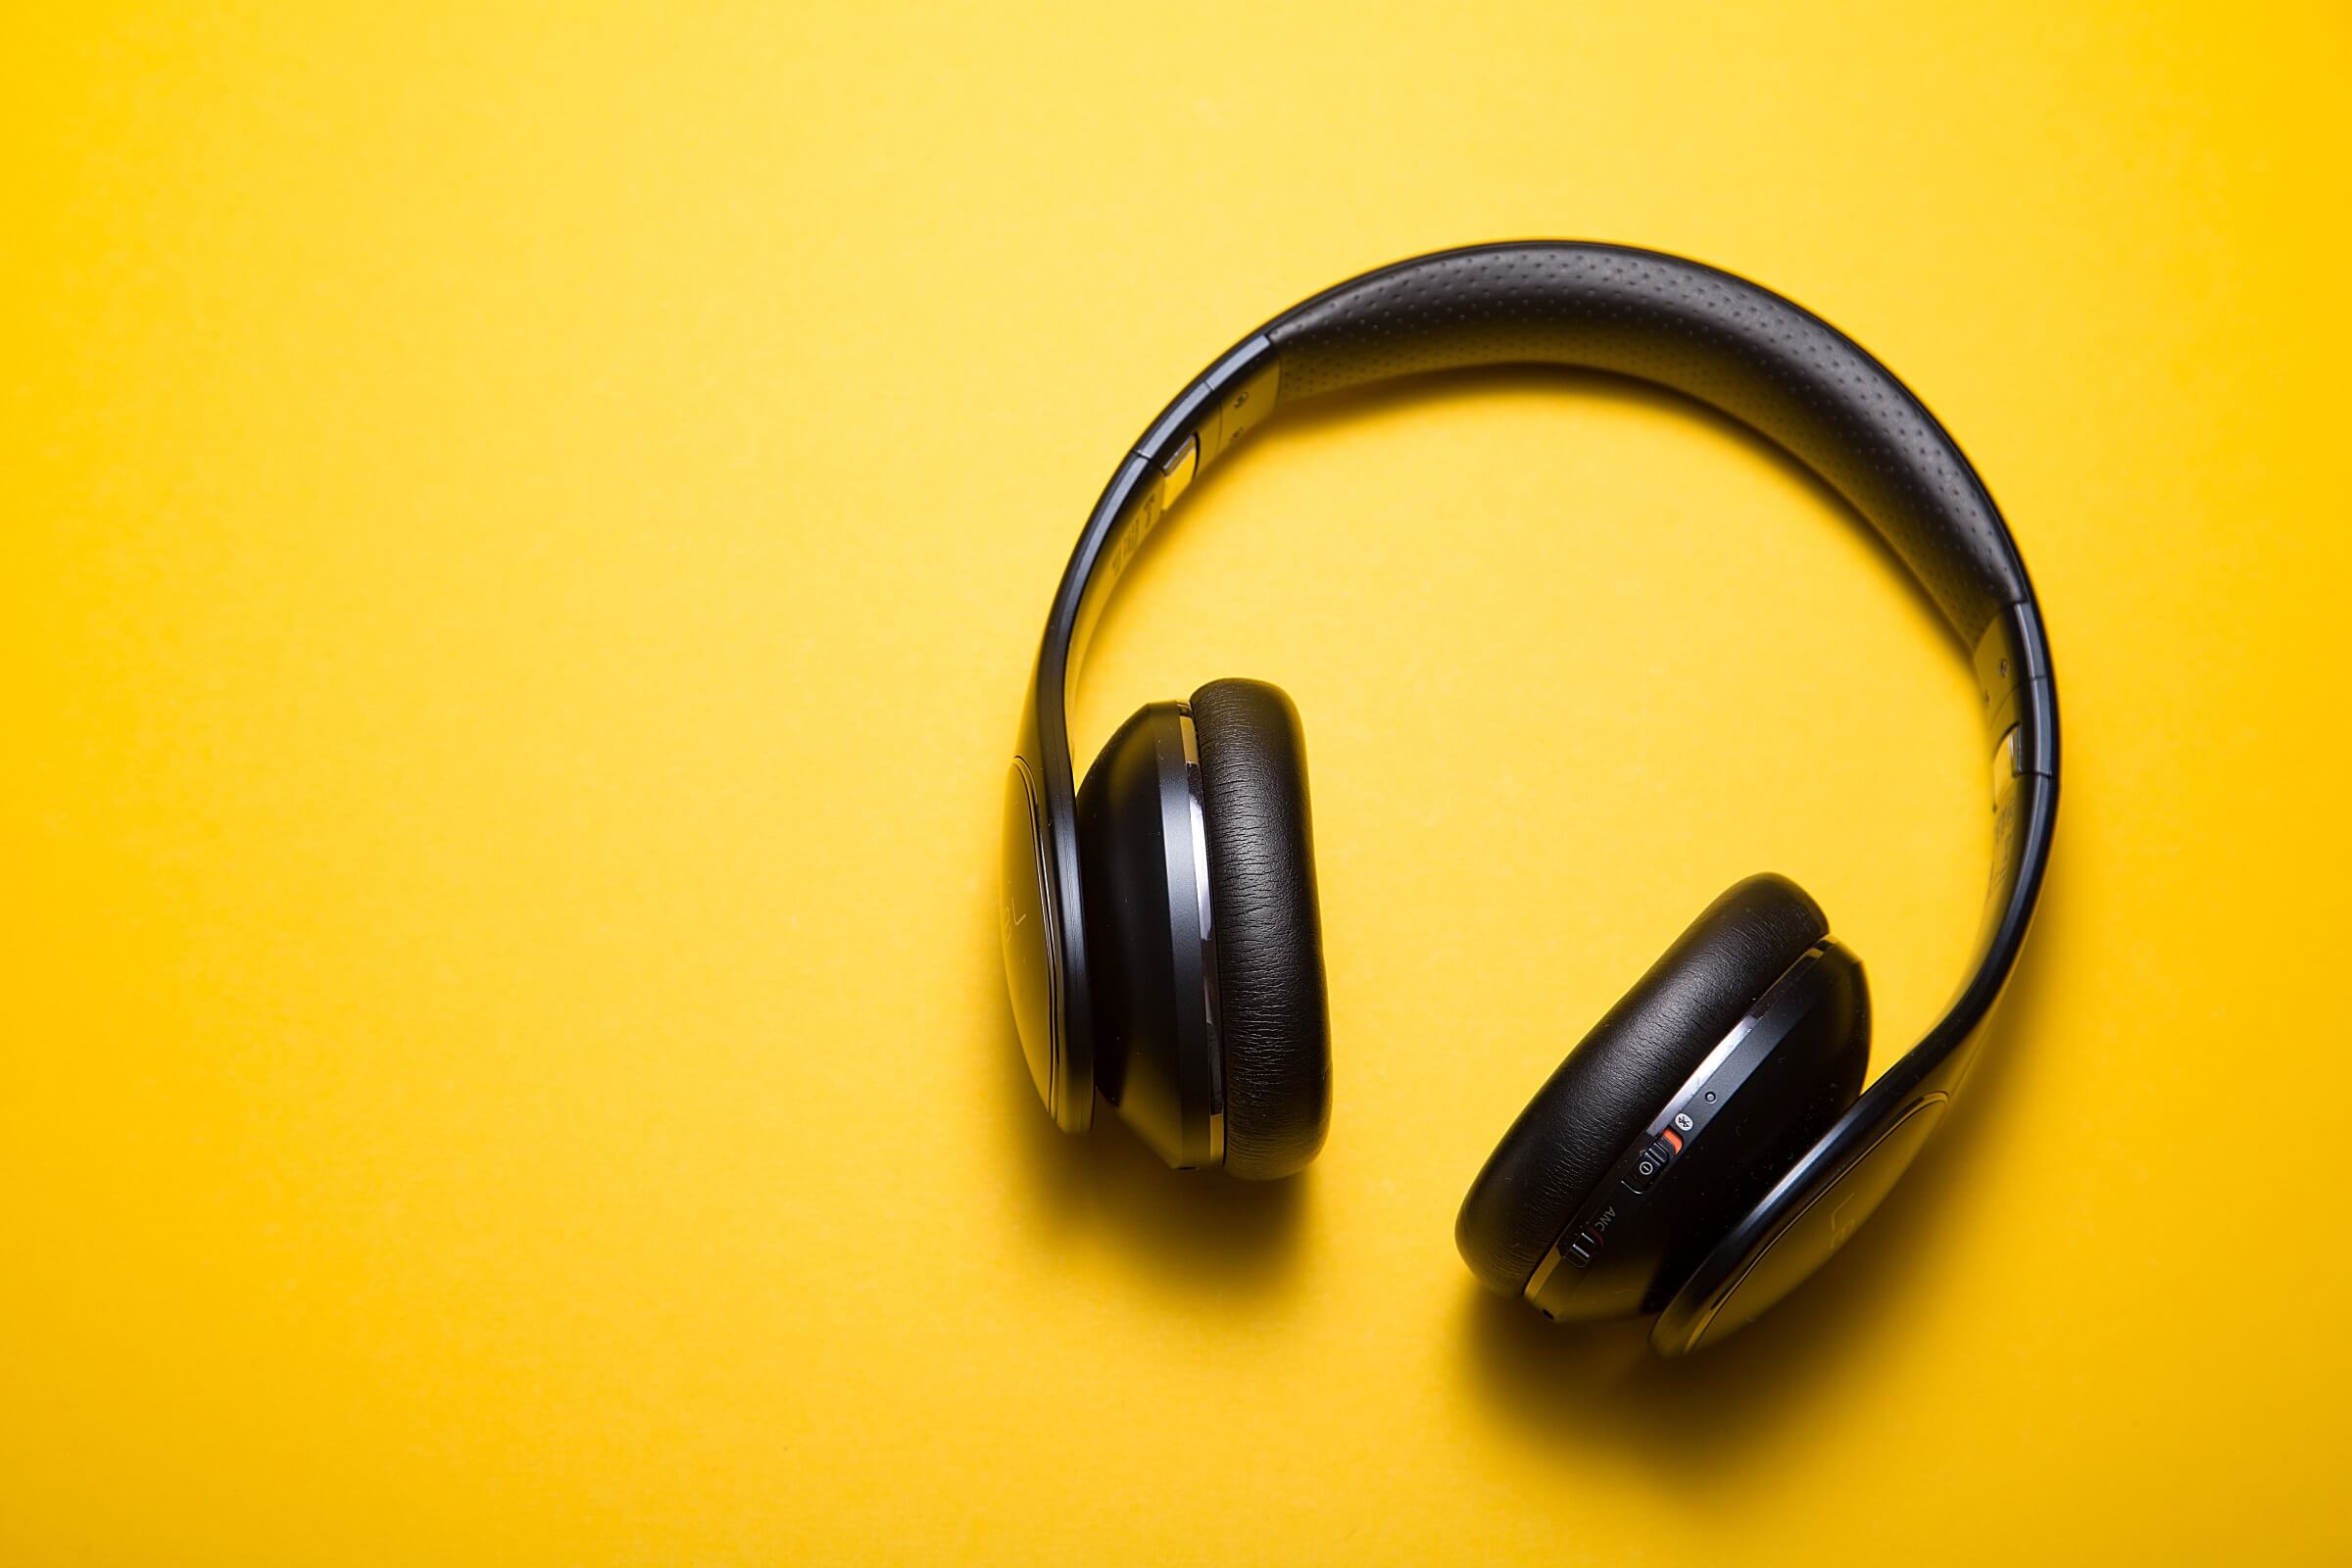 Black headphones lying on a yellow background